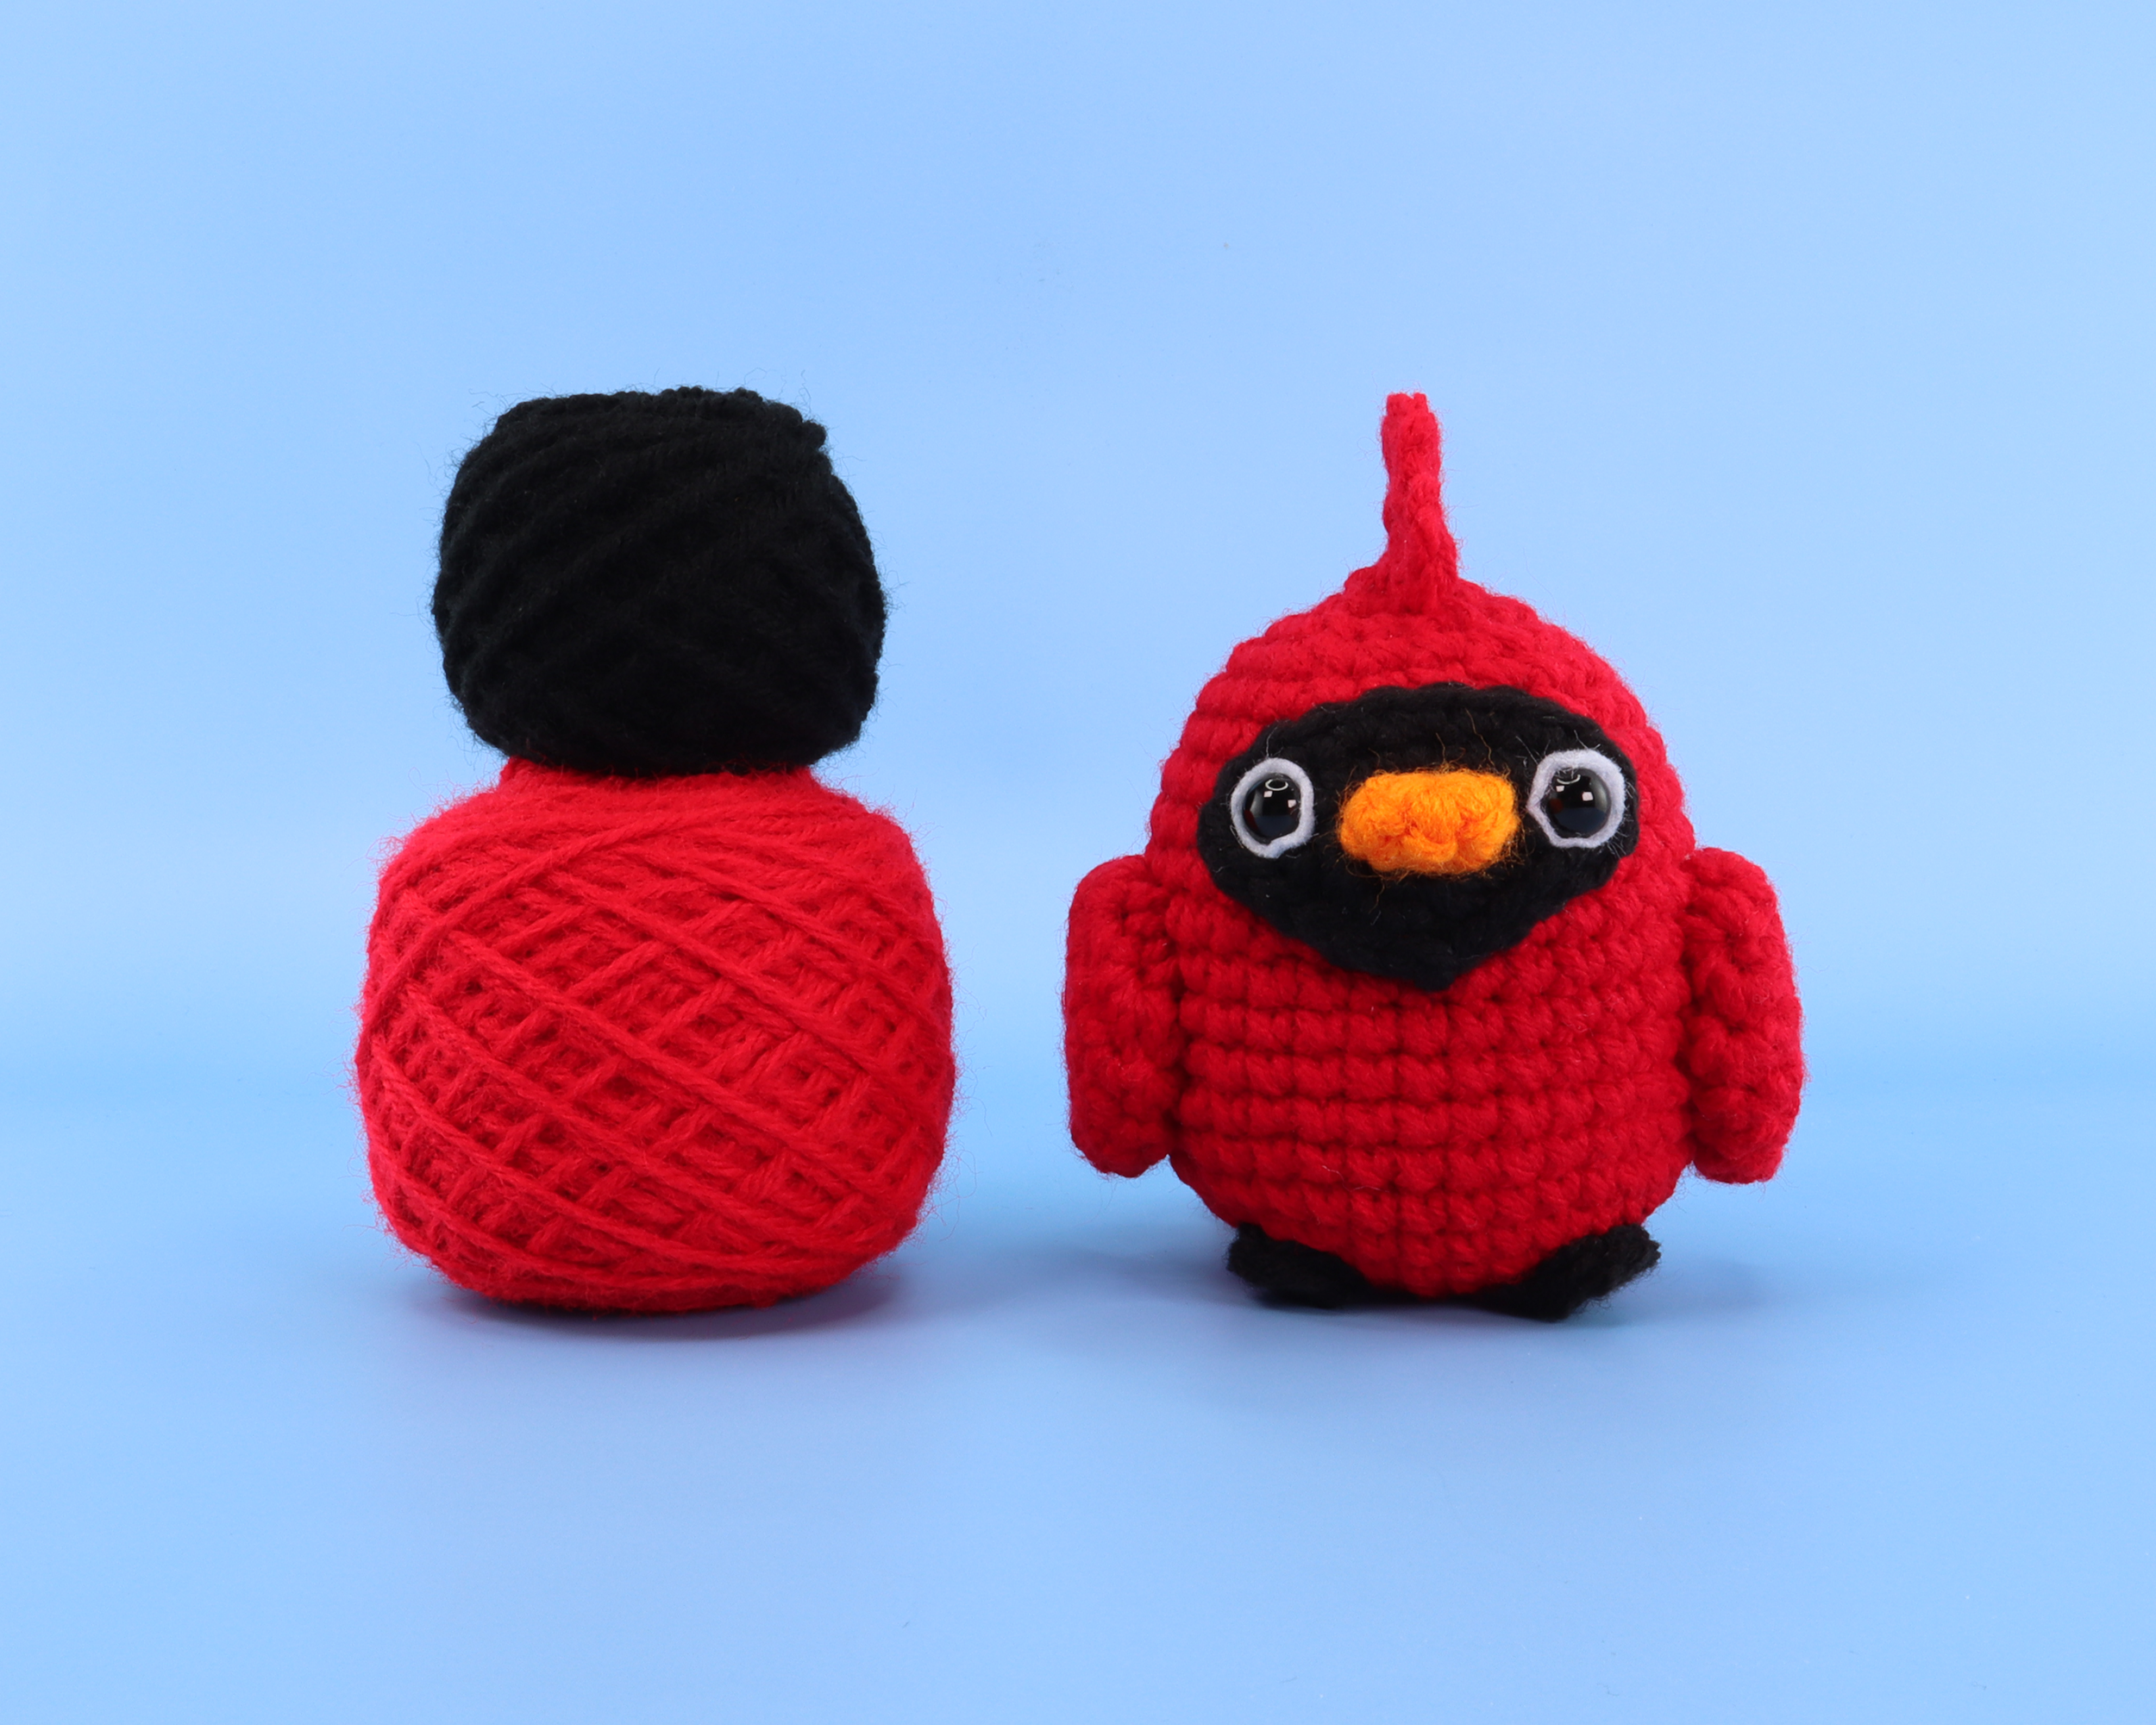 Redd The Cardinal Crochet Kit